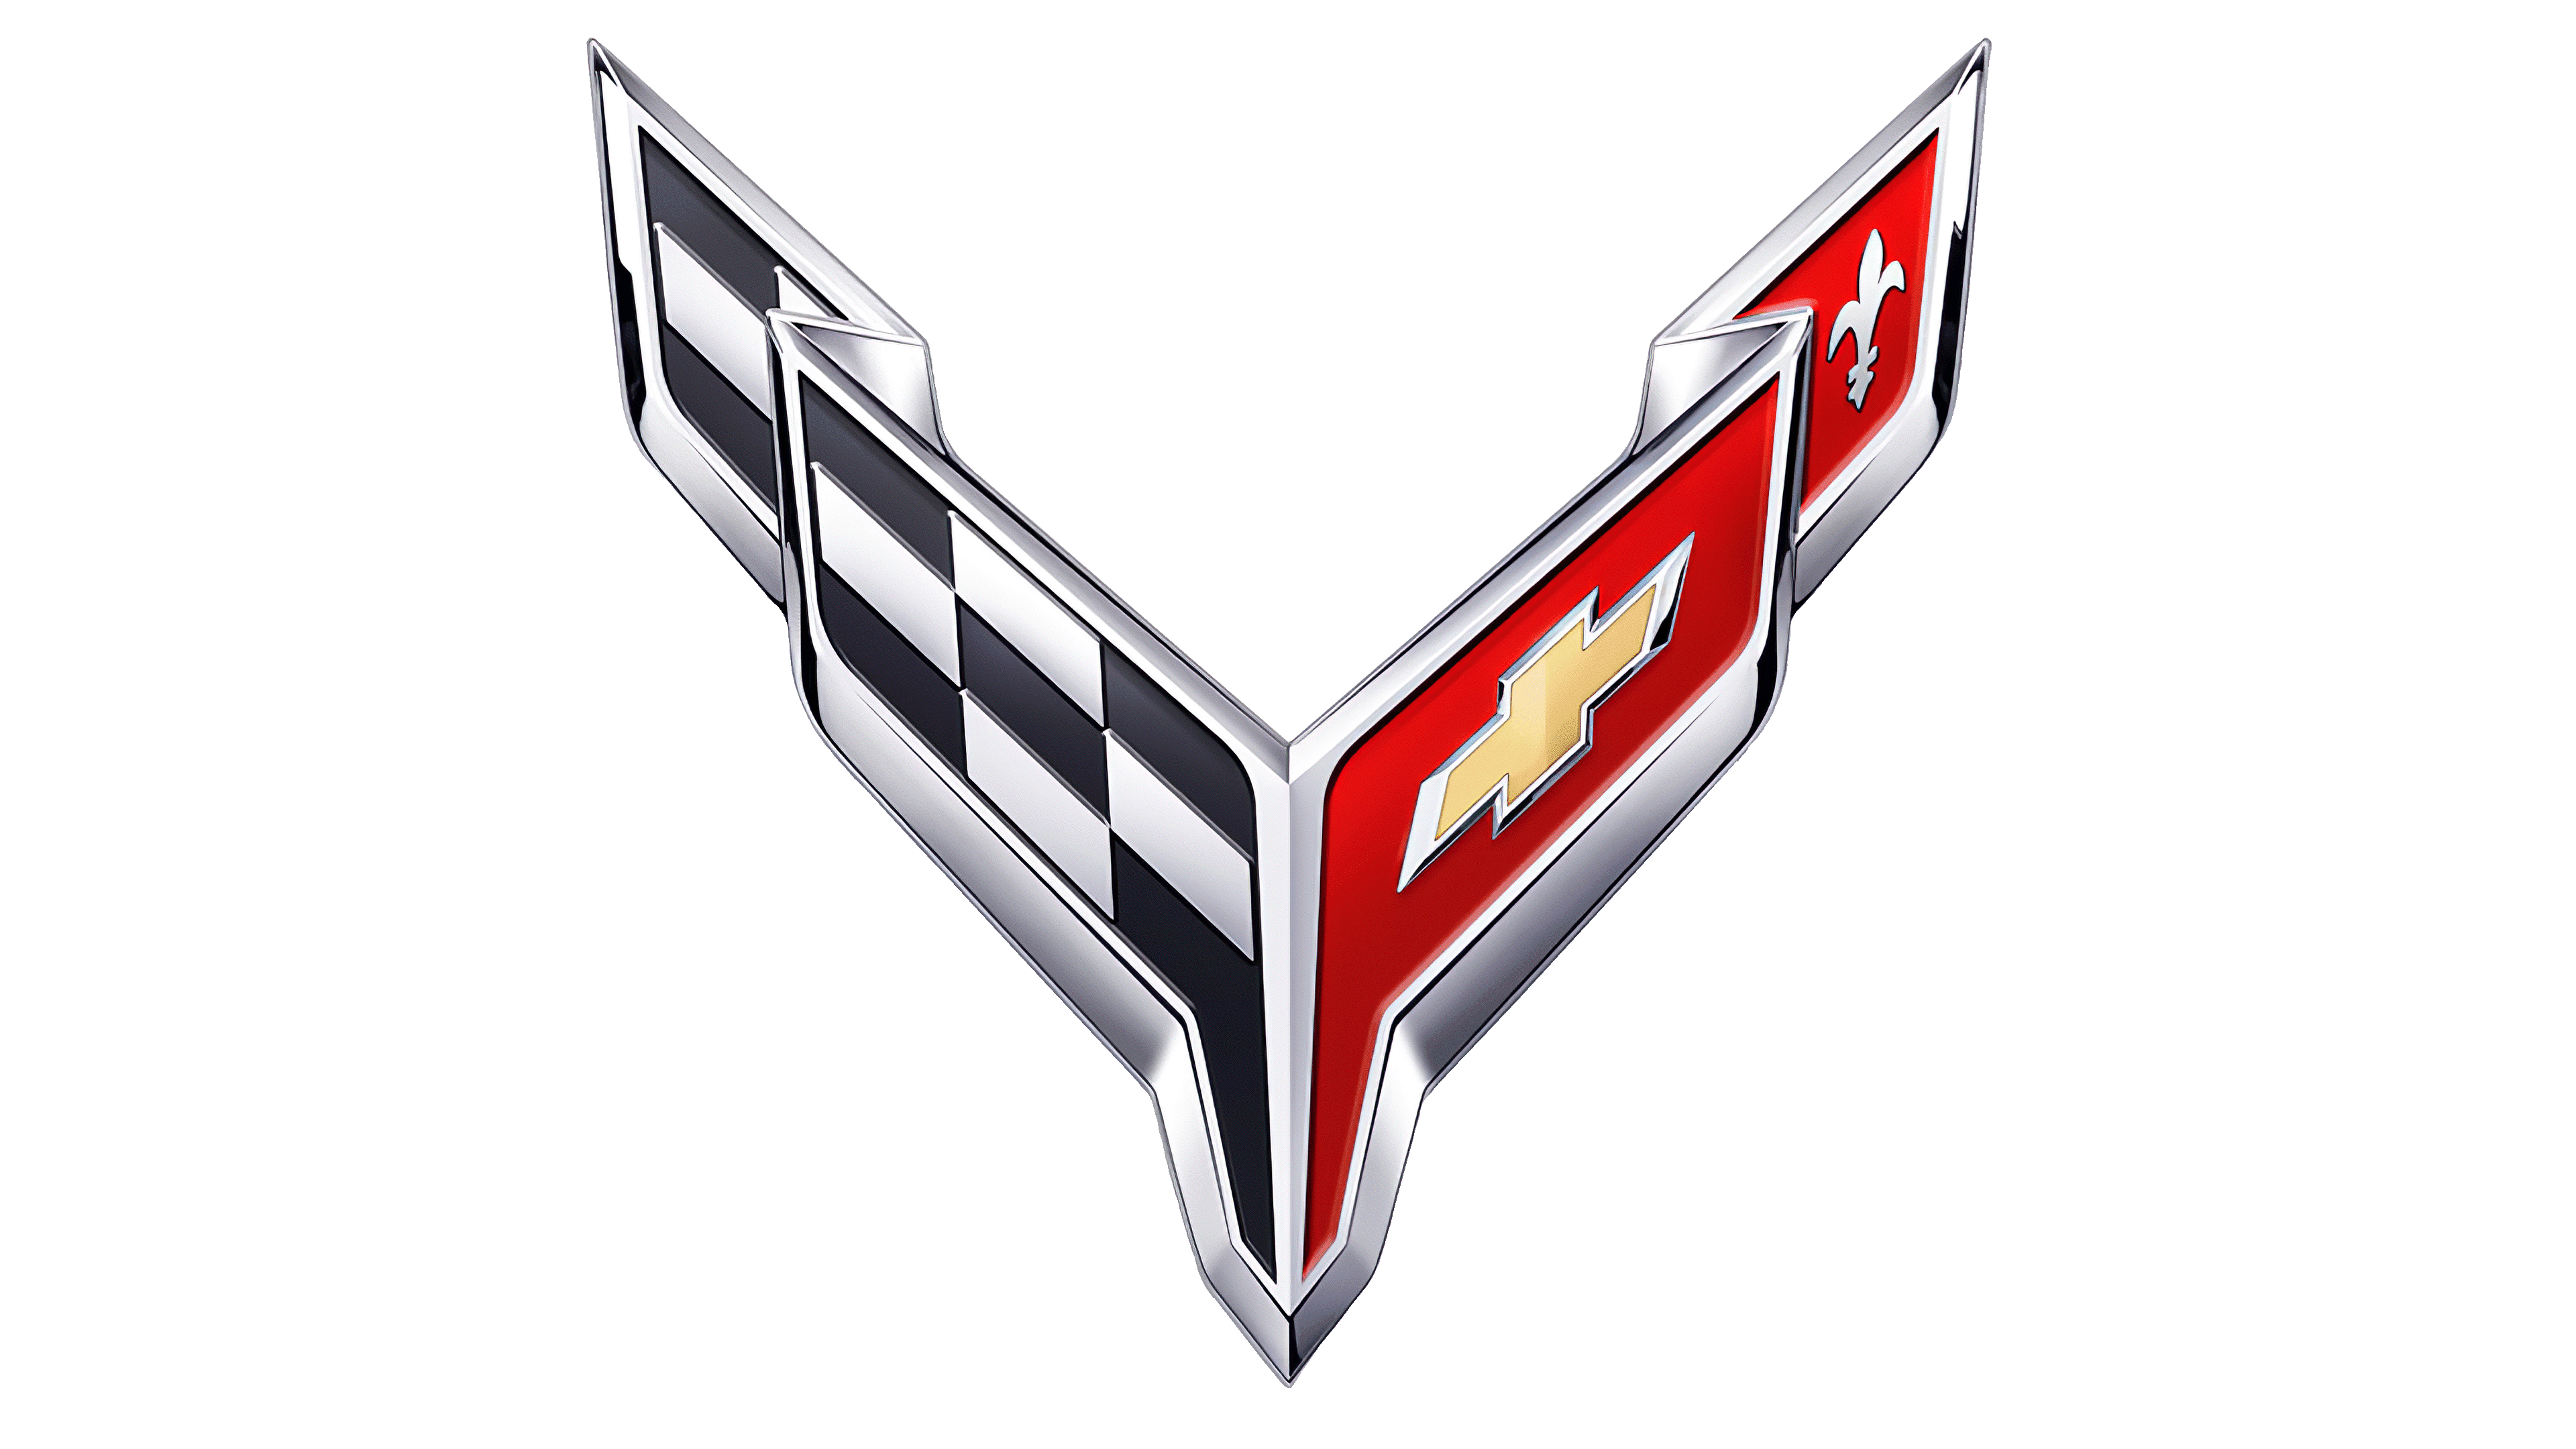 Corvette Logooutline Logo Image for Free Free Logo Image